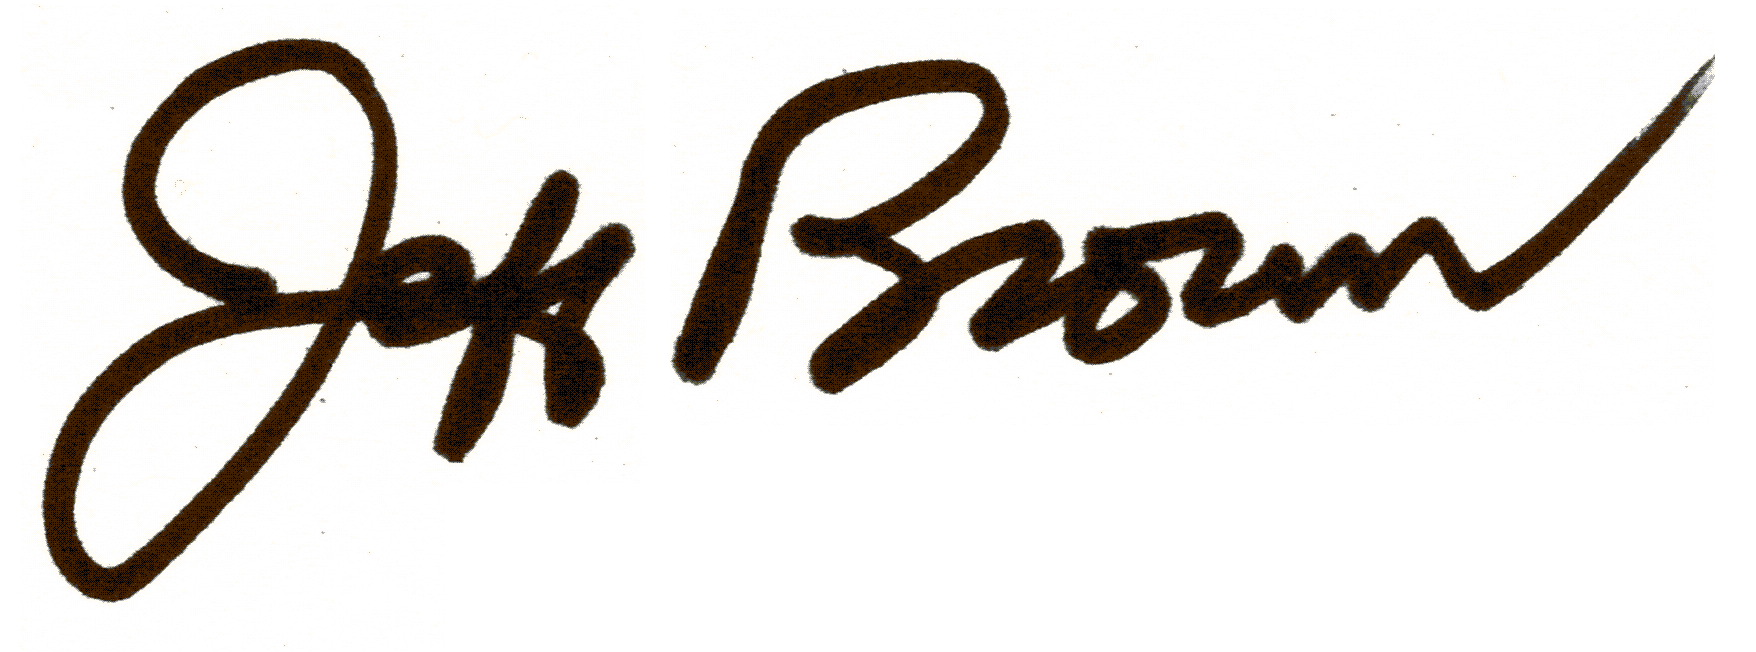 Jeffery A. Brown's signature